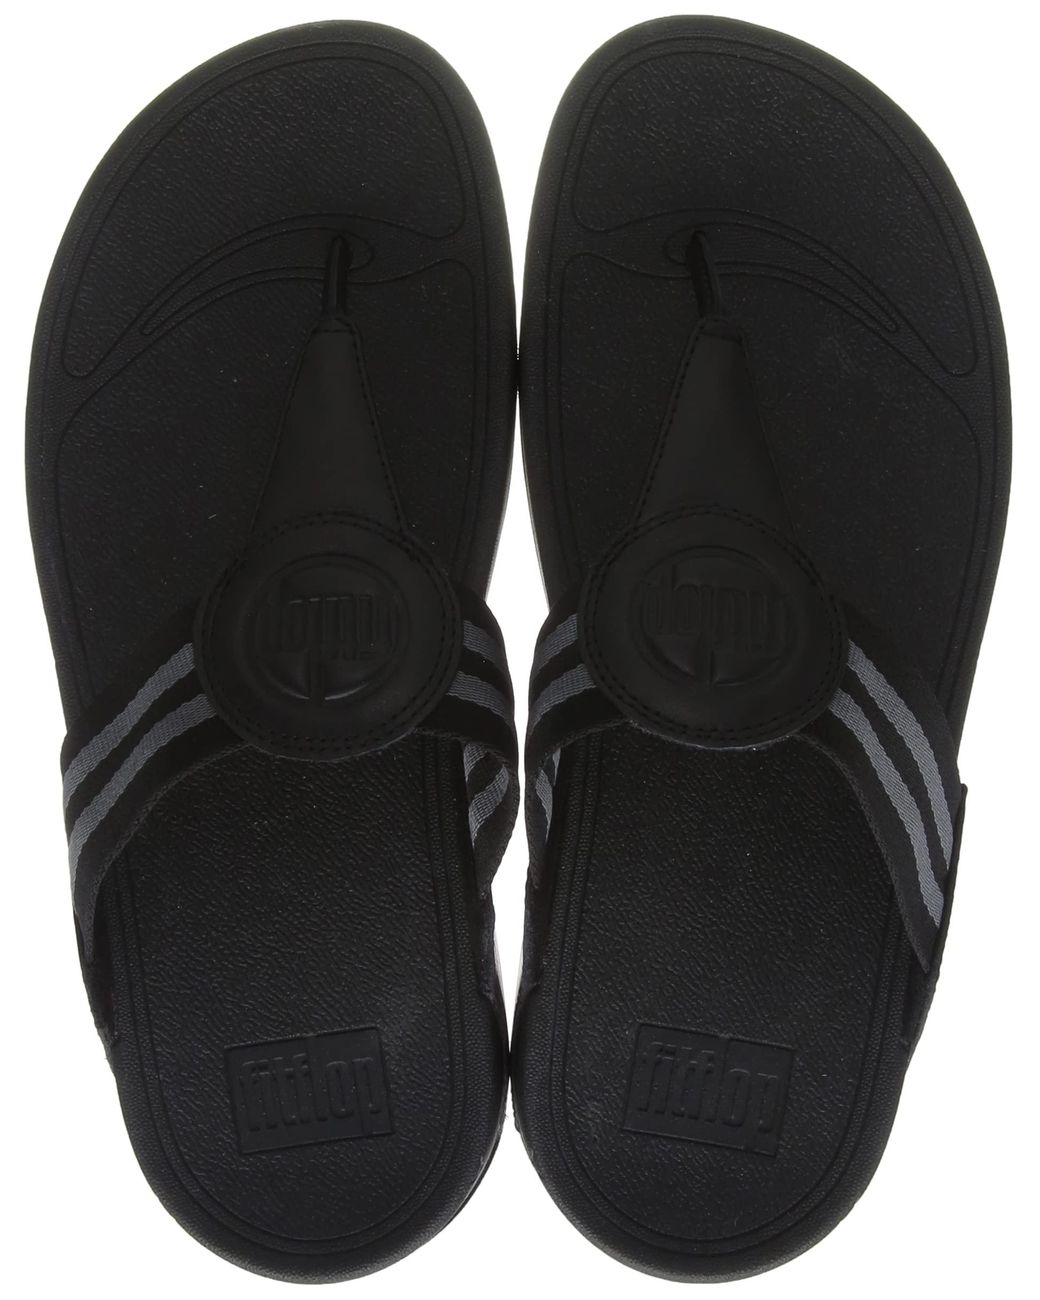 Fitflop Walkstar Toe Post Sandals Wedge In Black Lyst Uk